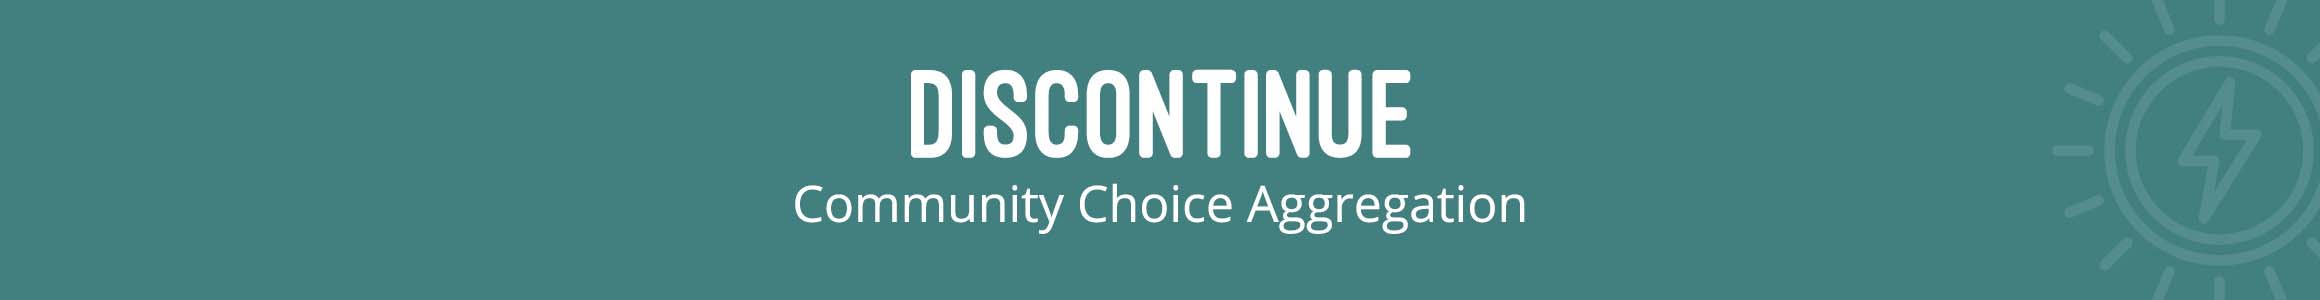 Discontinue community choice aggregation